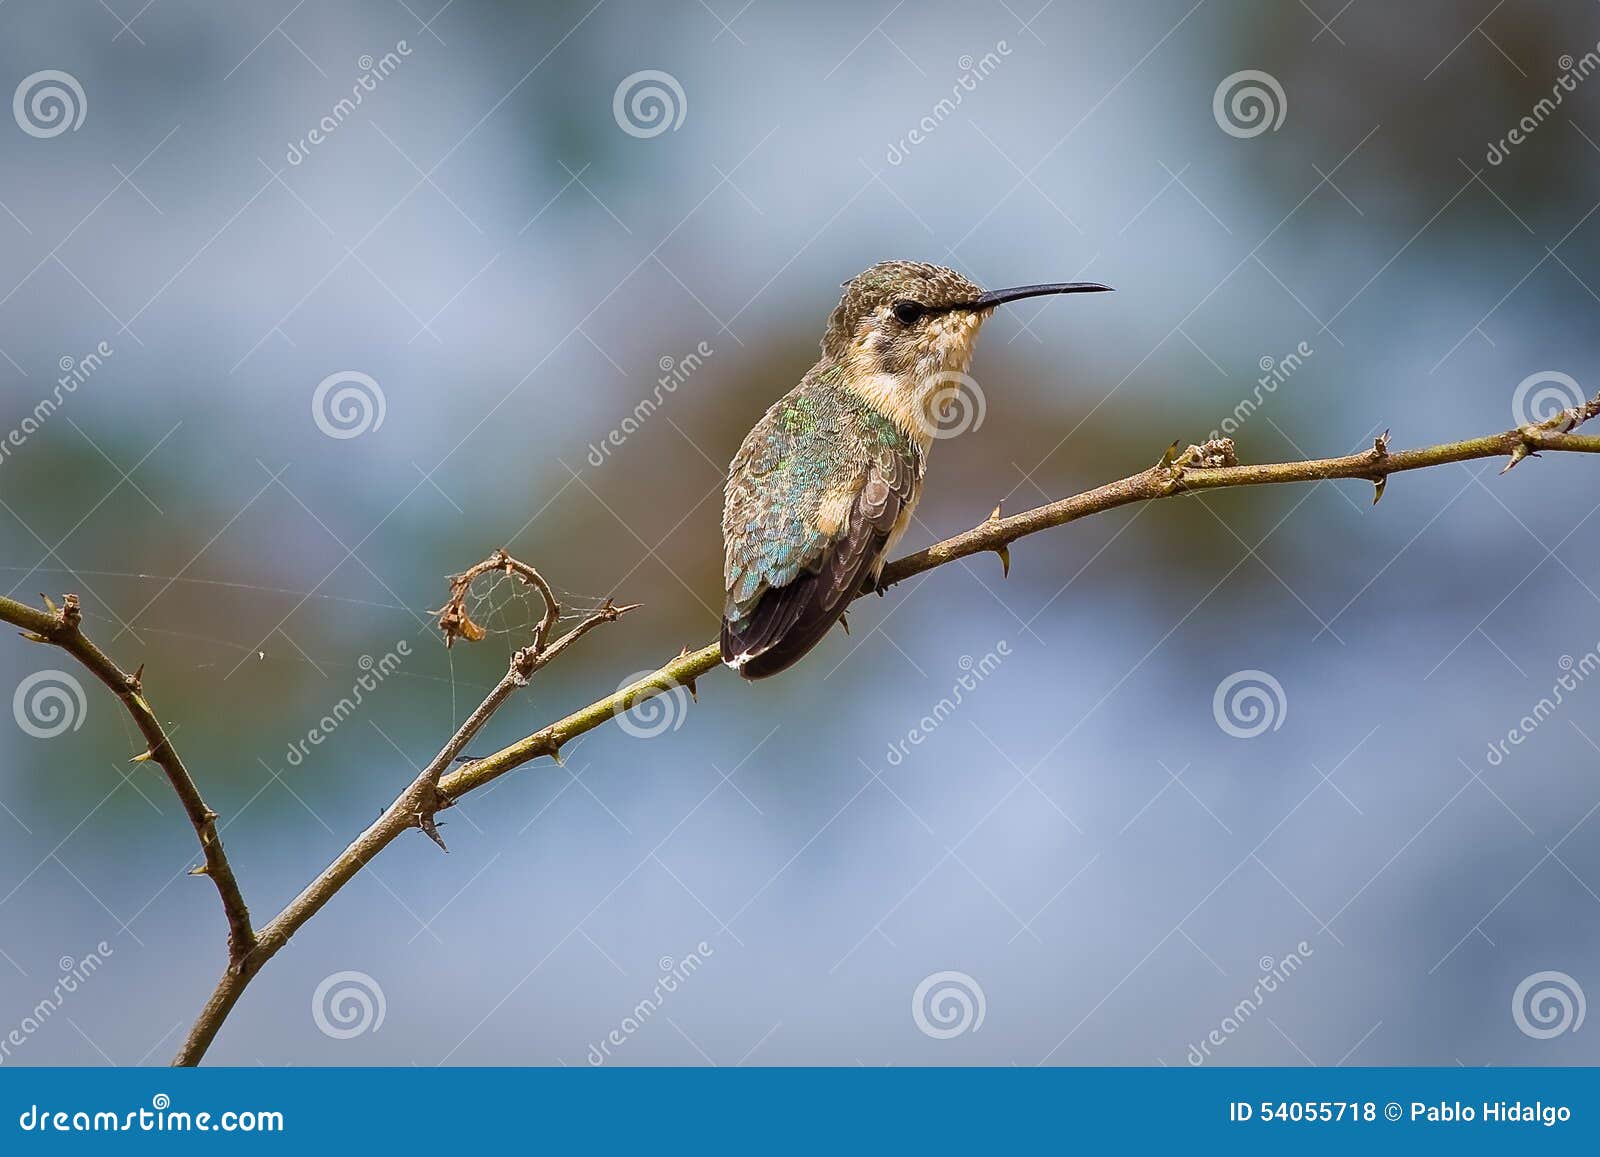 close up shot of small hummingbird